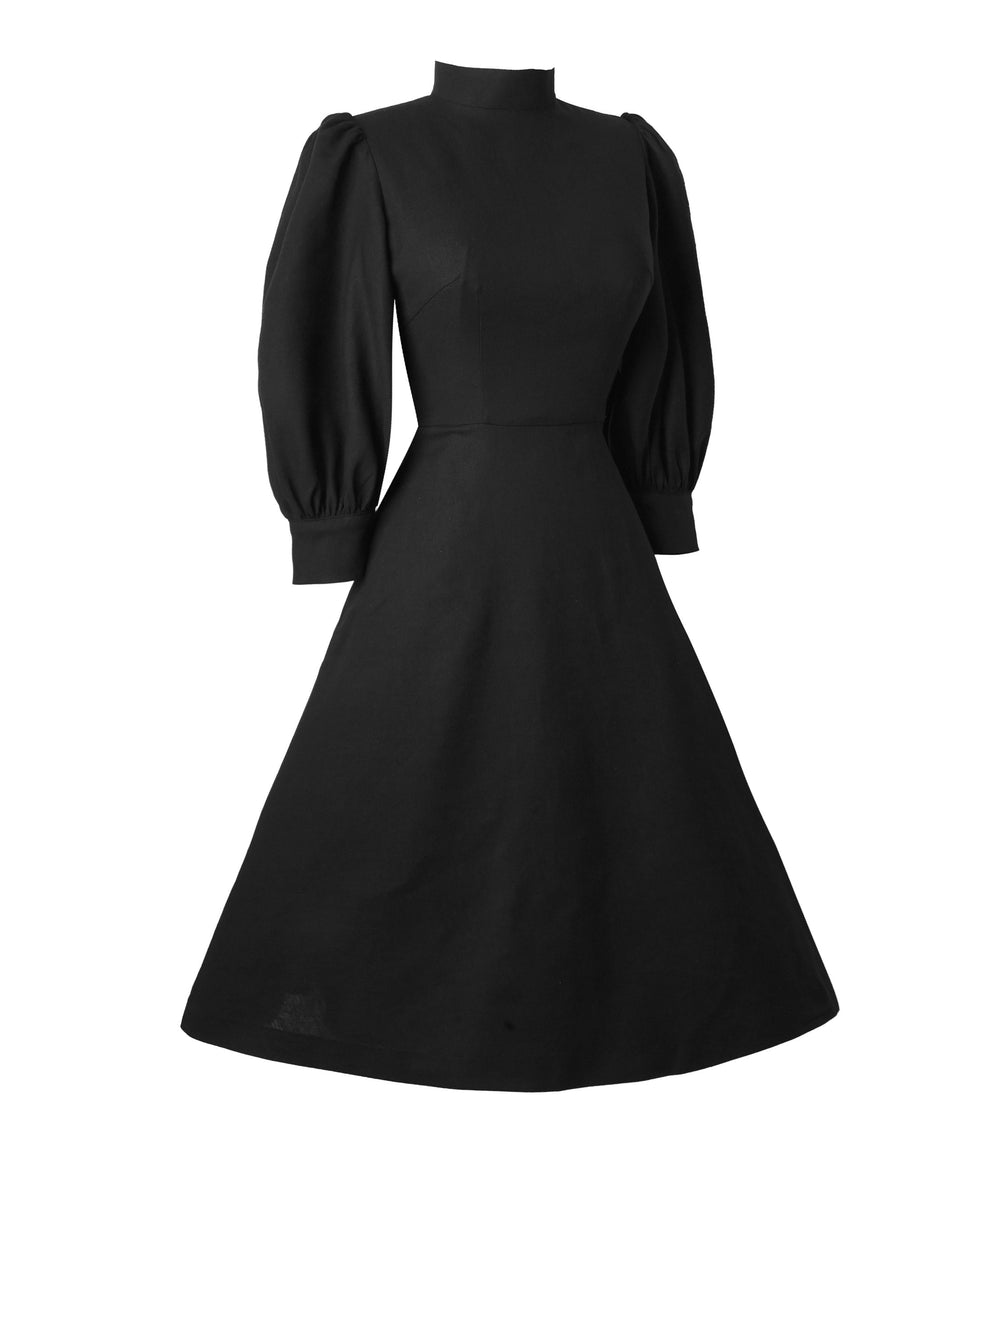 RTS - Size S - Beatrix Dress in Midnight Black Linen